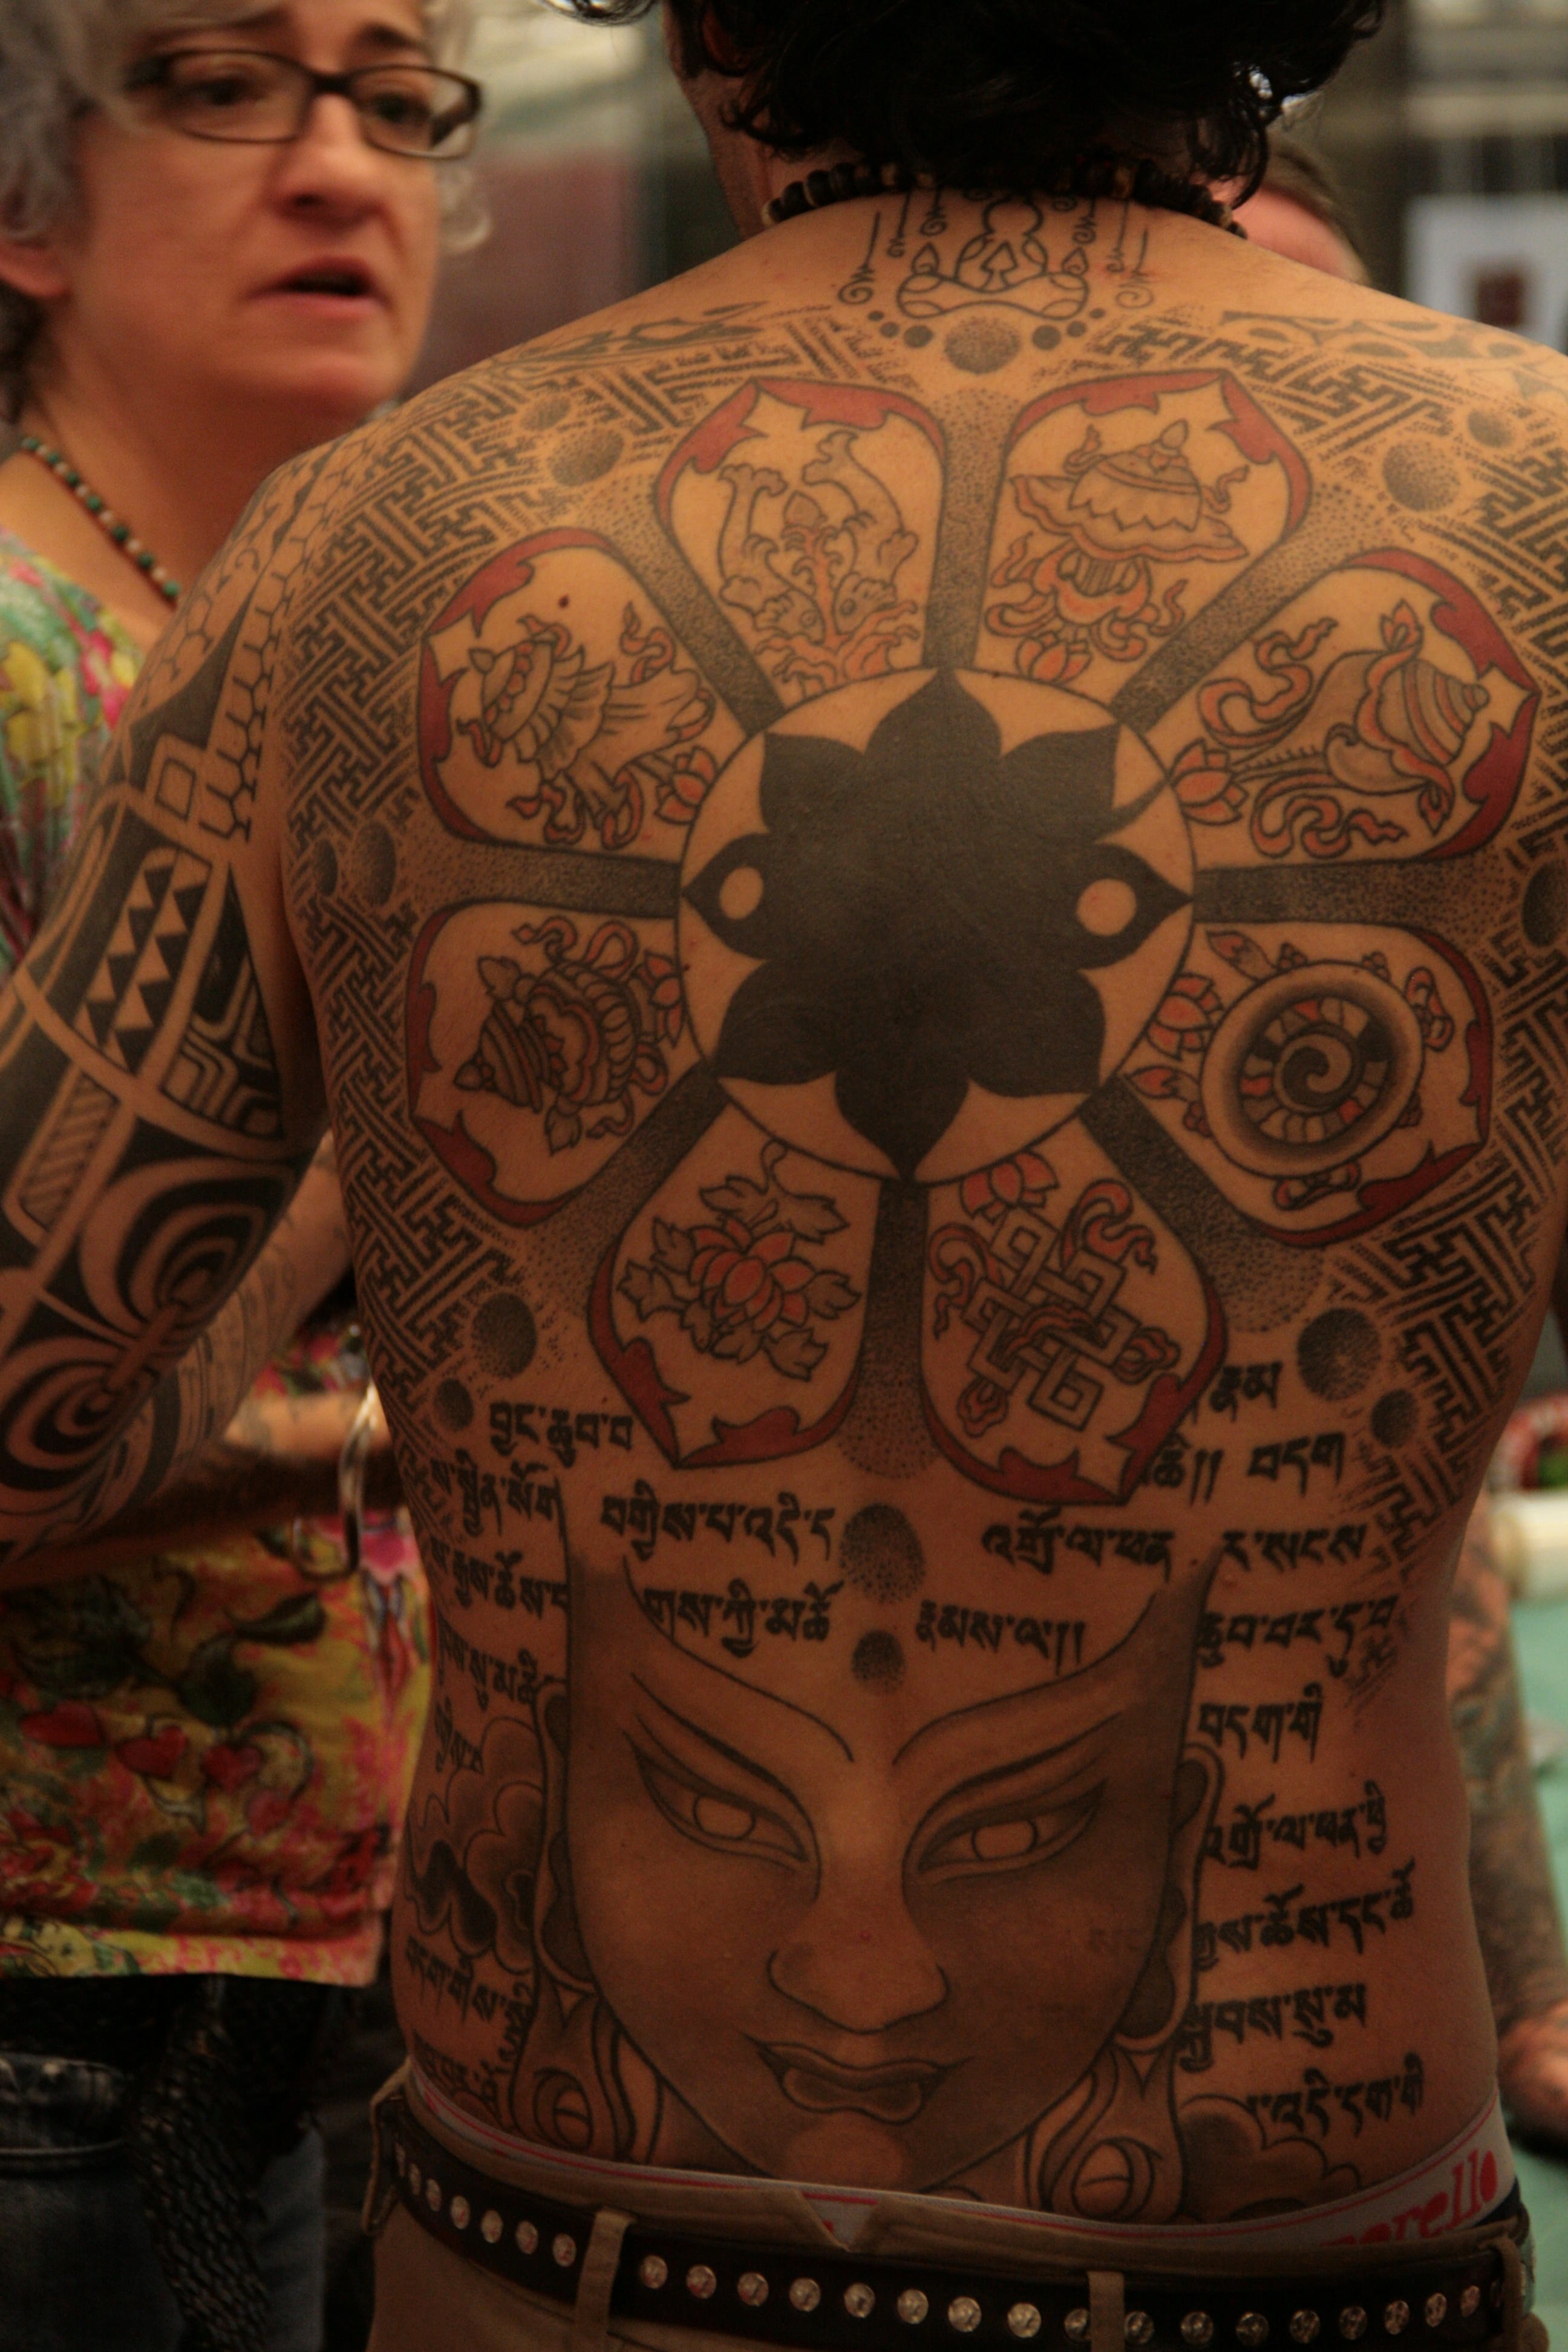 mandala tattoo on back